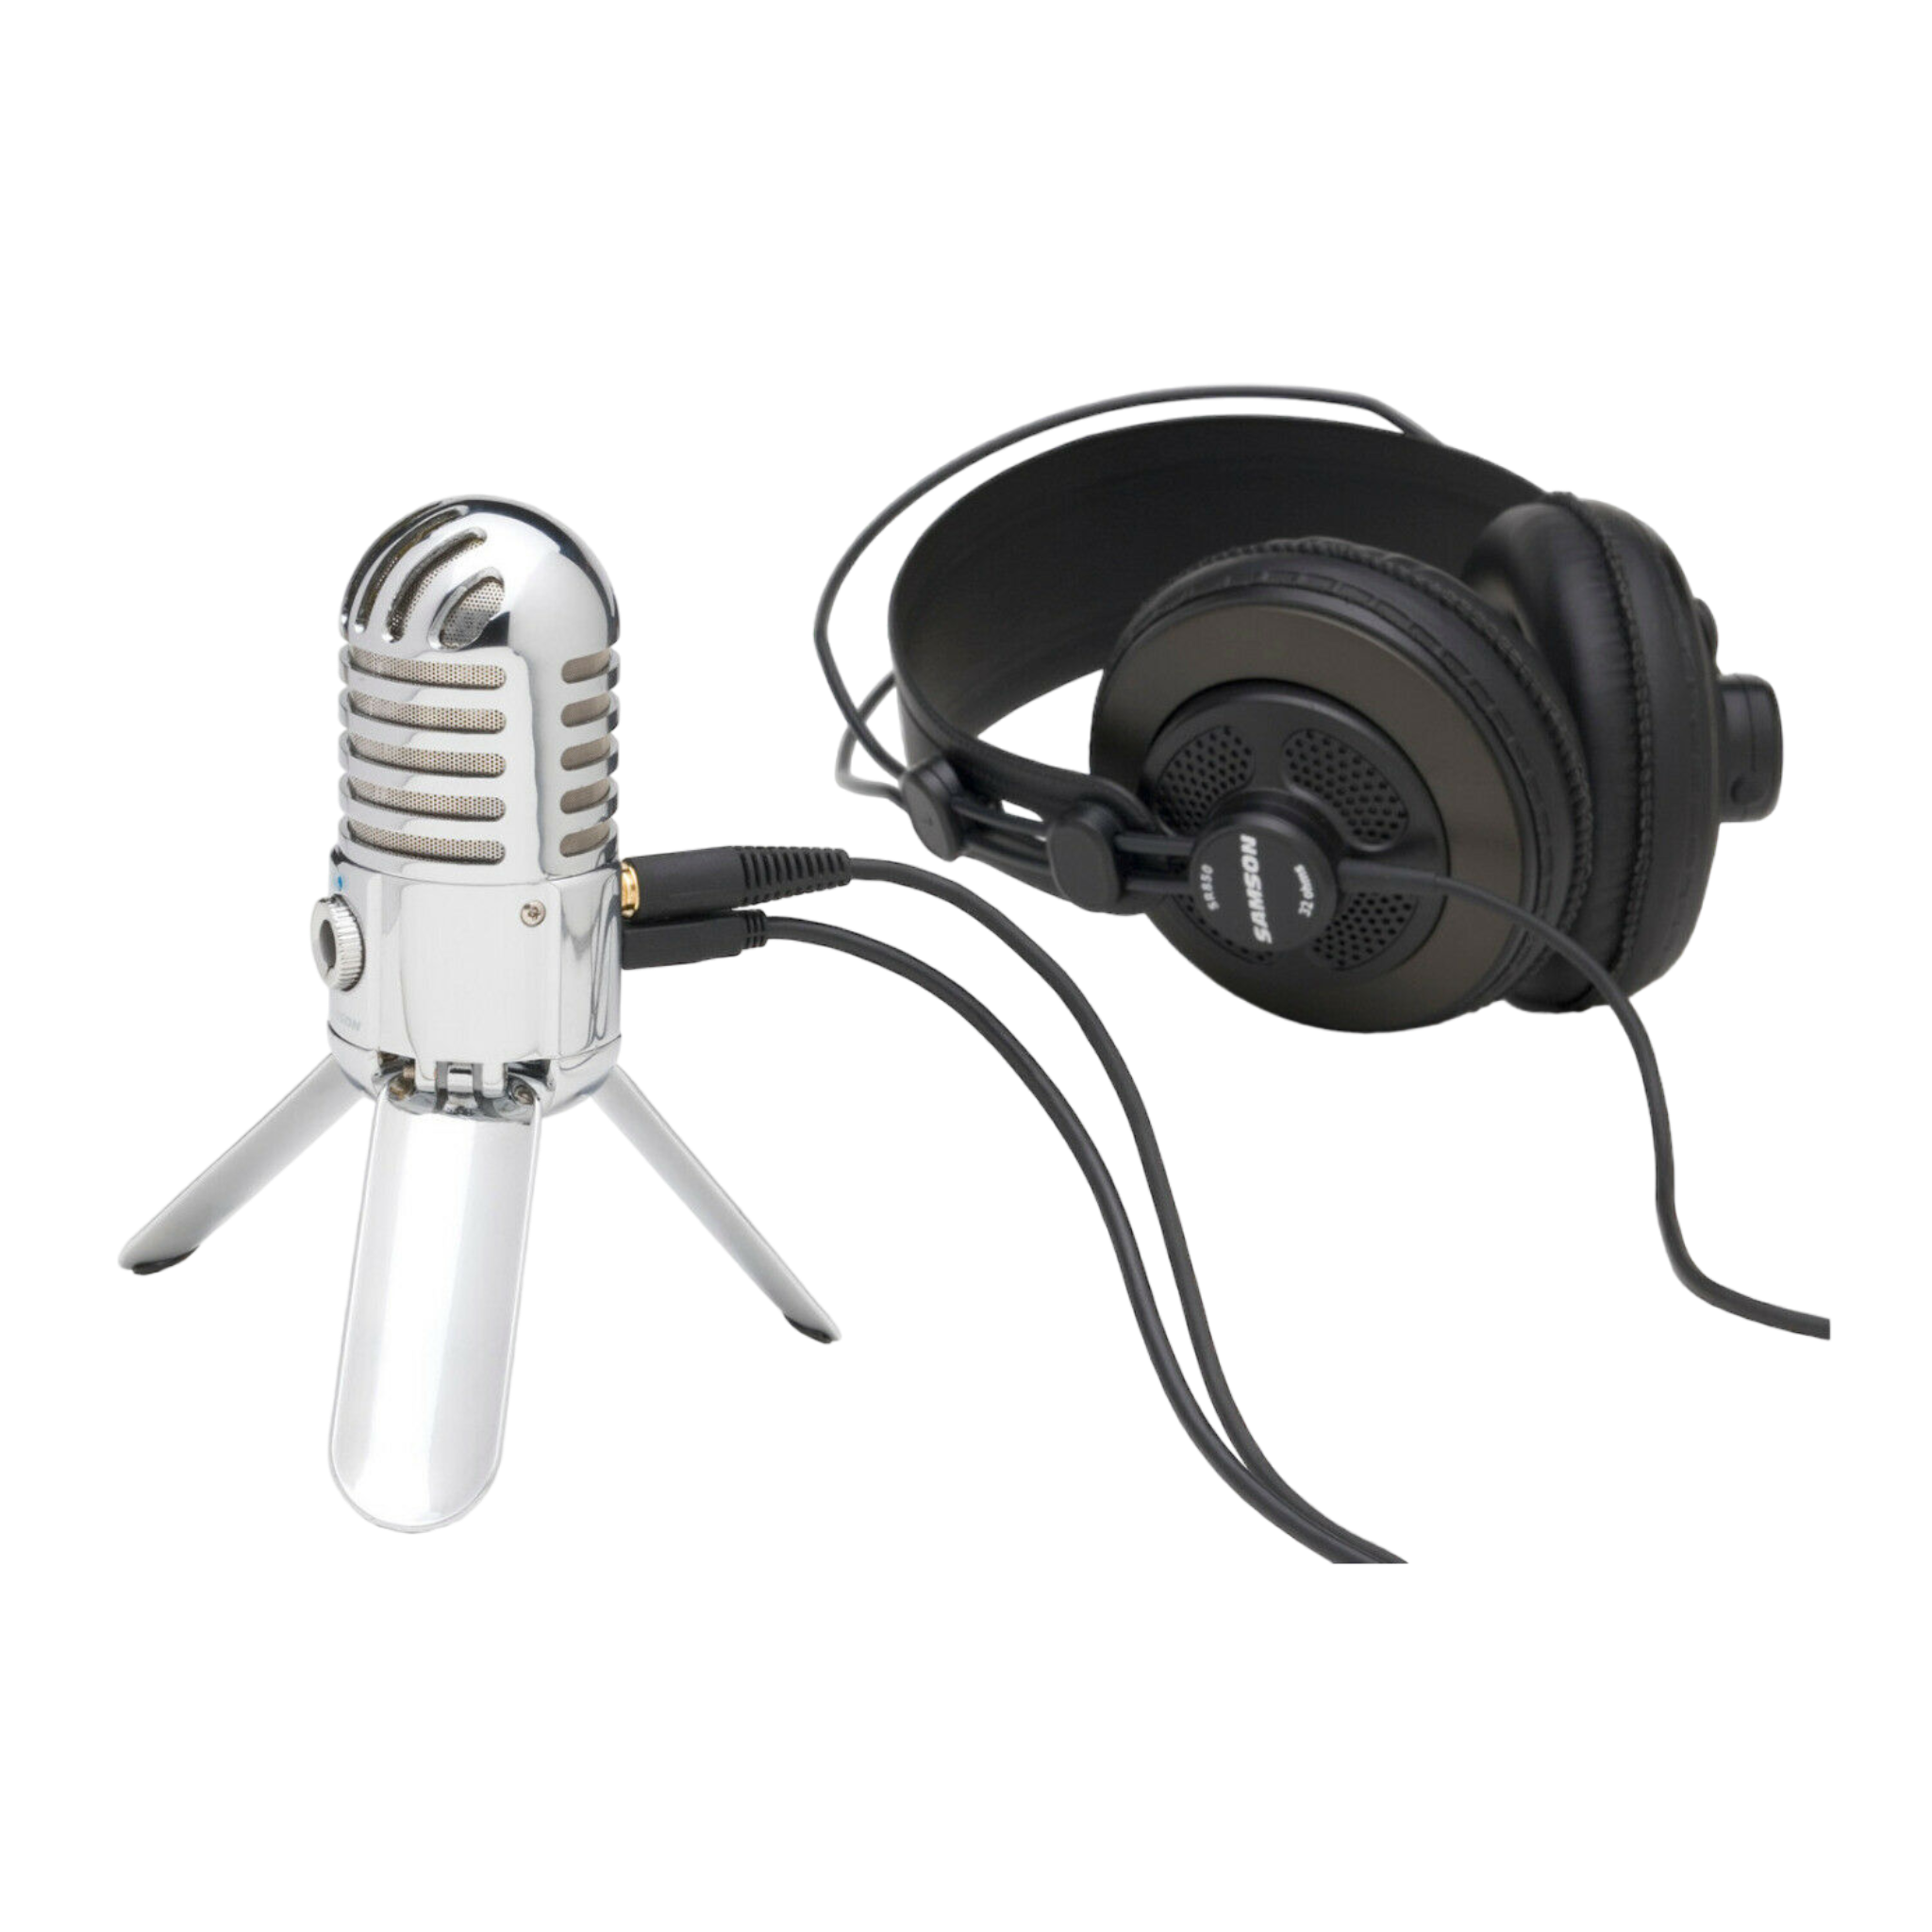 Samson Meteor Mic USB Studio Condenser Microphone - Silver - SAMTR - Pro-Distributing